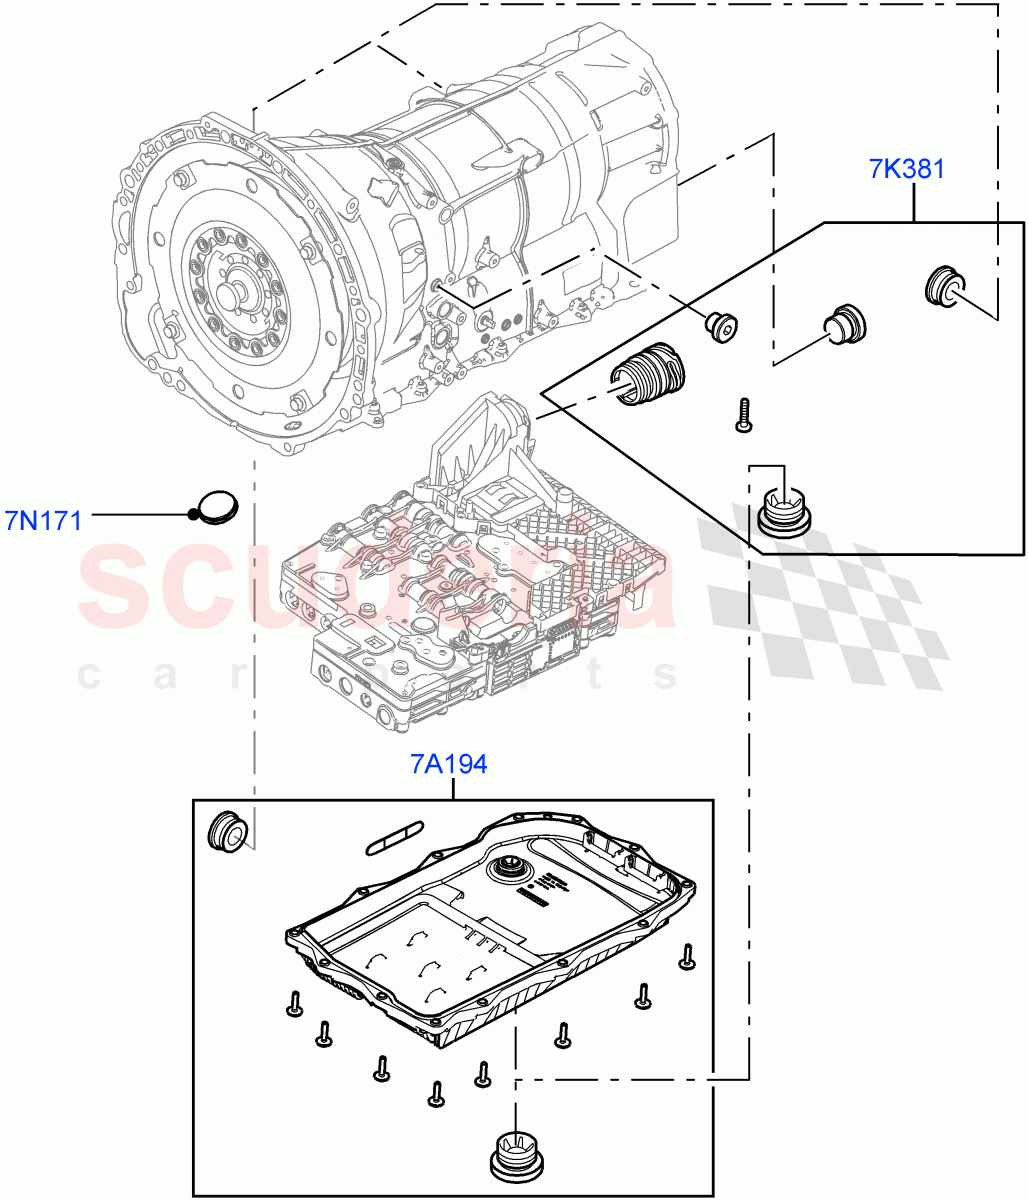 Transmission External Components(3.0L DOHC GDI SC V6 PETROL,8 Speed Auto Trans ZF 8HP70 4WD,3.0 V6 D Gen2 Twin Turbo) of Land Rover Land Rover Range Rover Velar (2017+) [3.0 I6 Turbo Petrol AJ20P6]